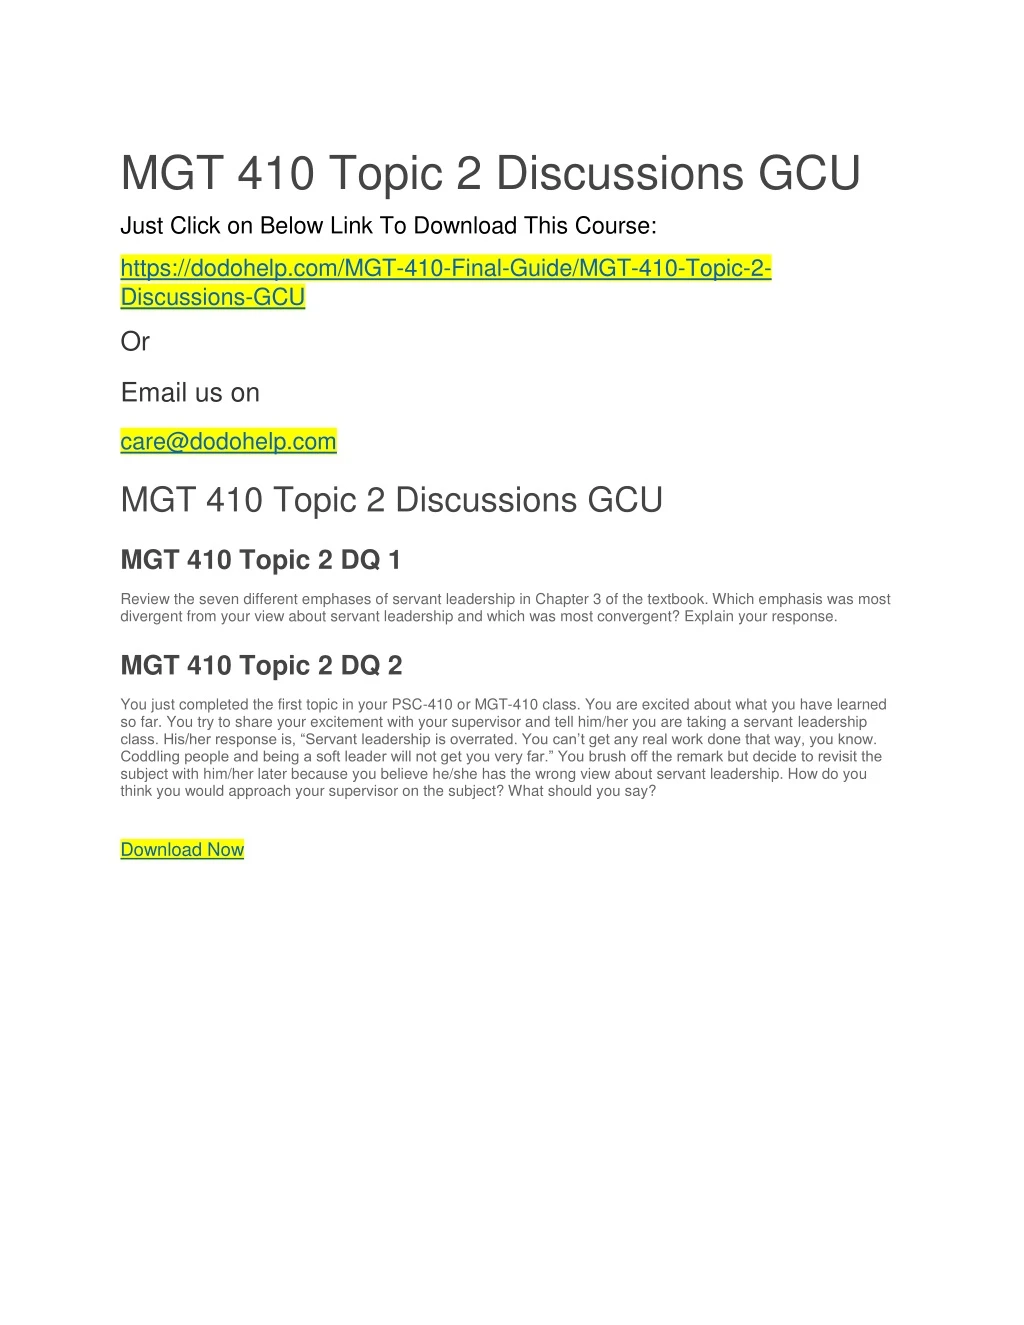 mgt 410 topic 2 discussions gcu just click